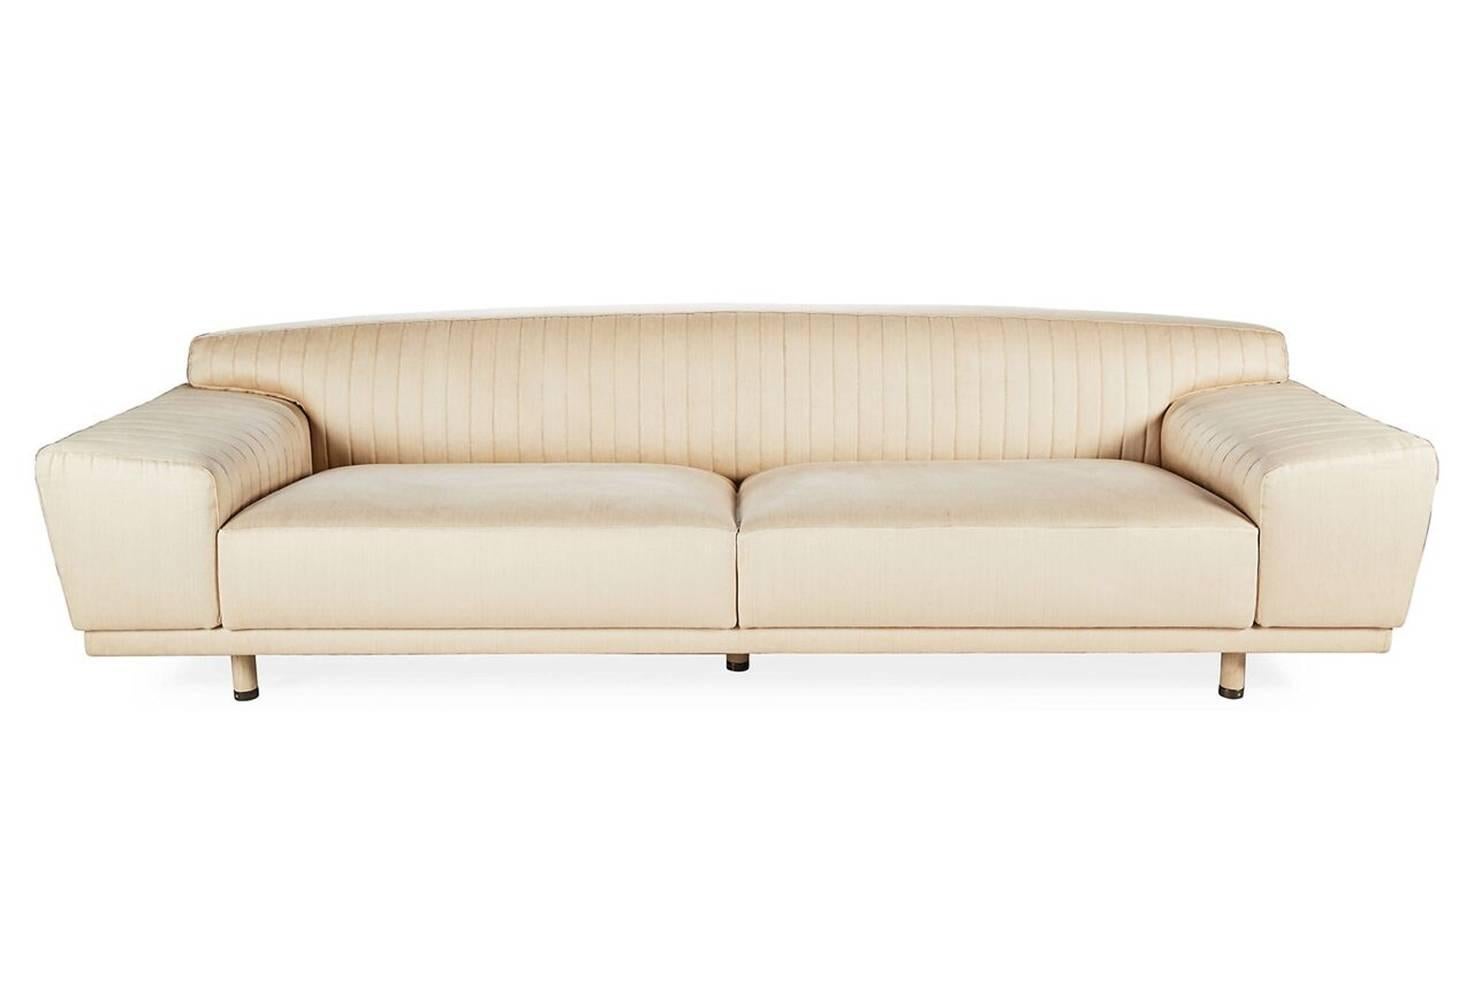 Sofa in beige fabric.